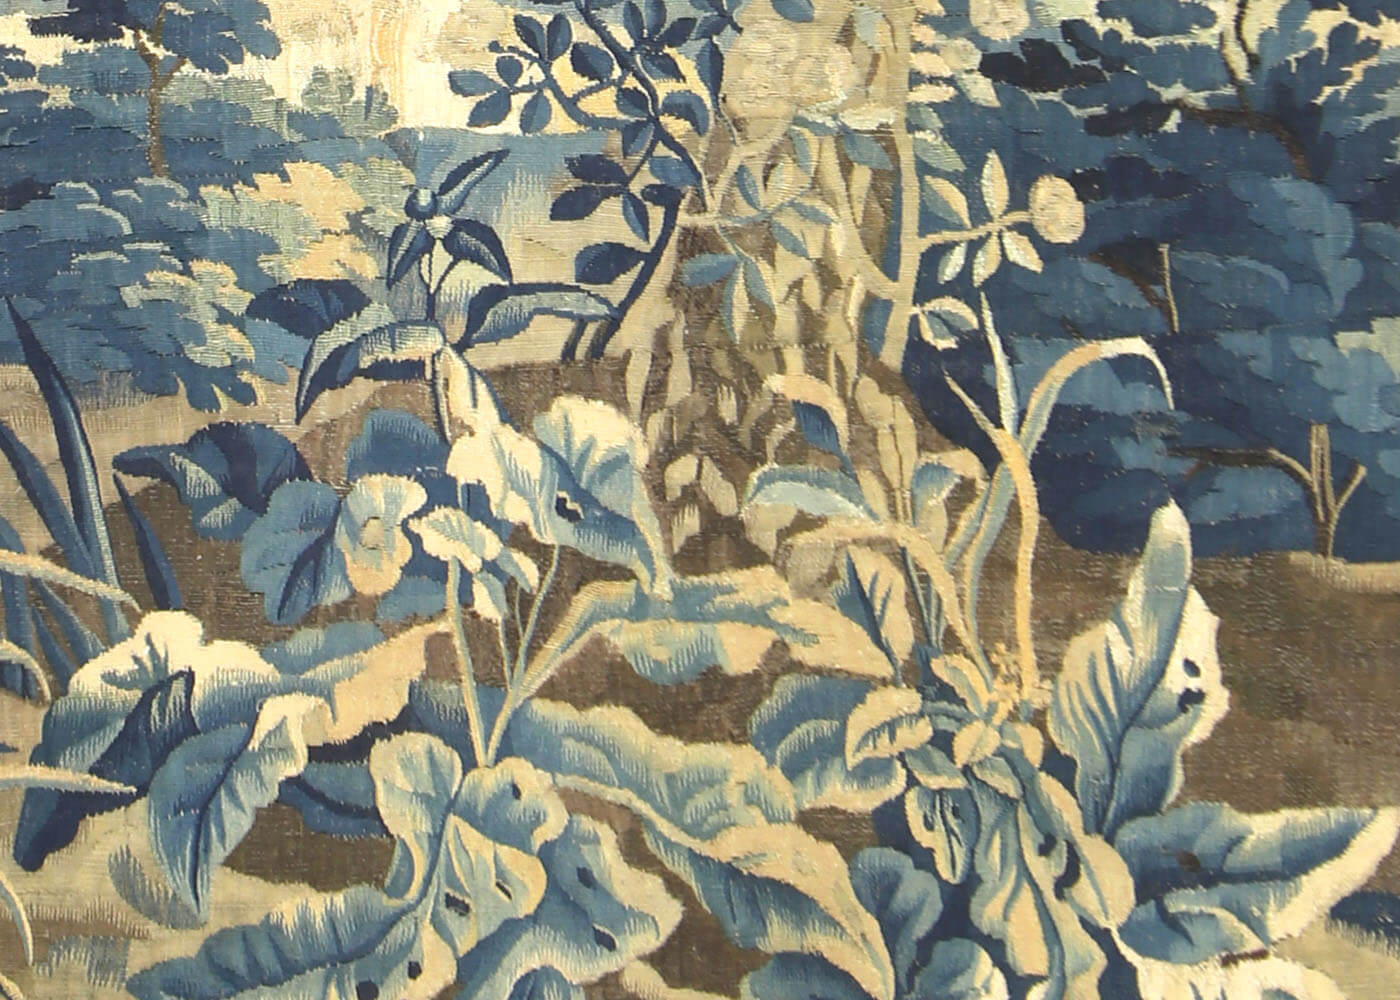 Antique Flemish Tapestry - 6'6" x 9'4"